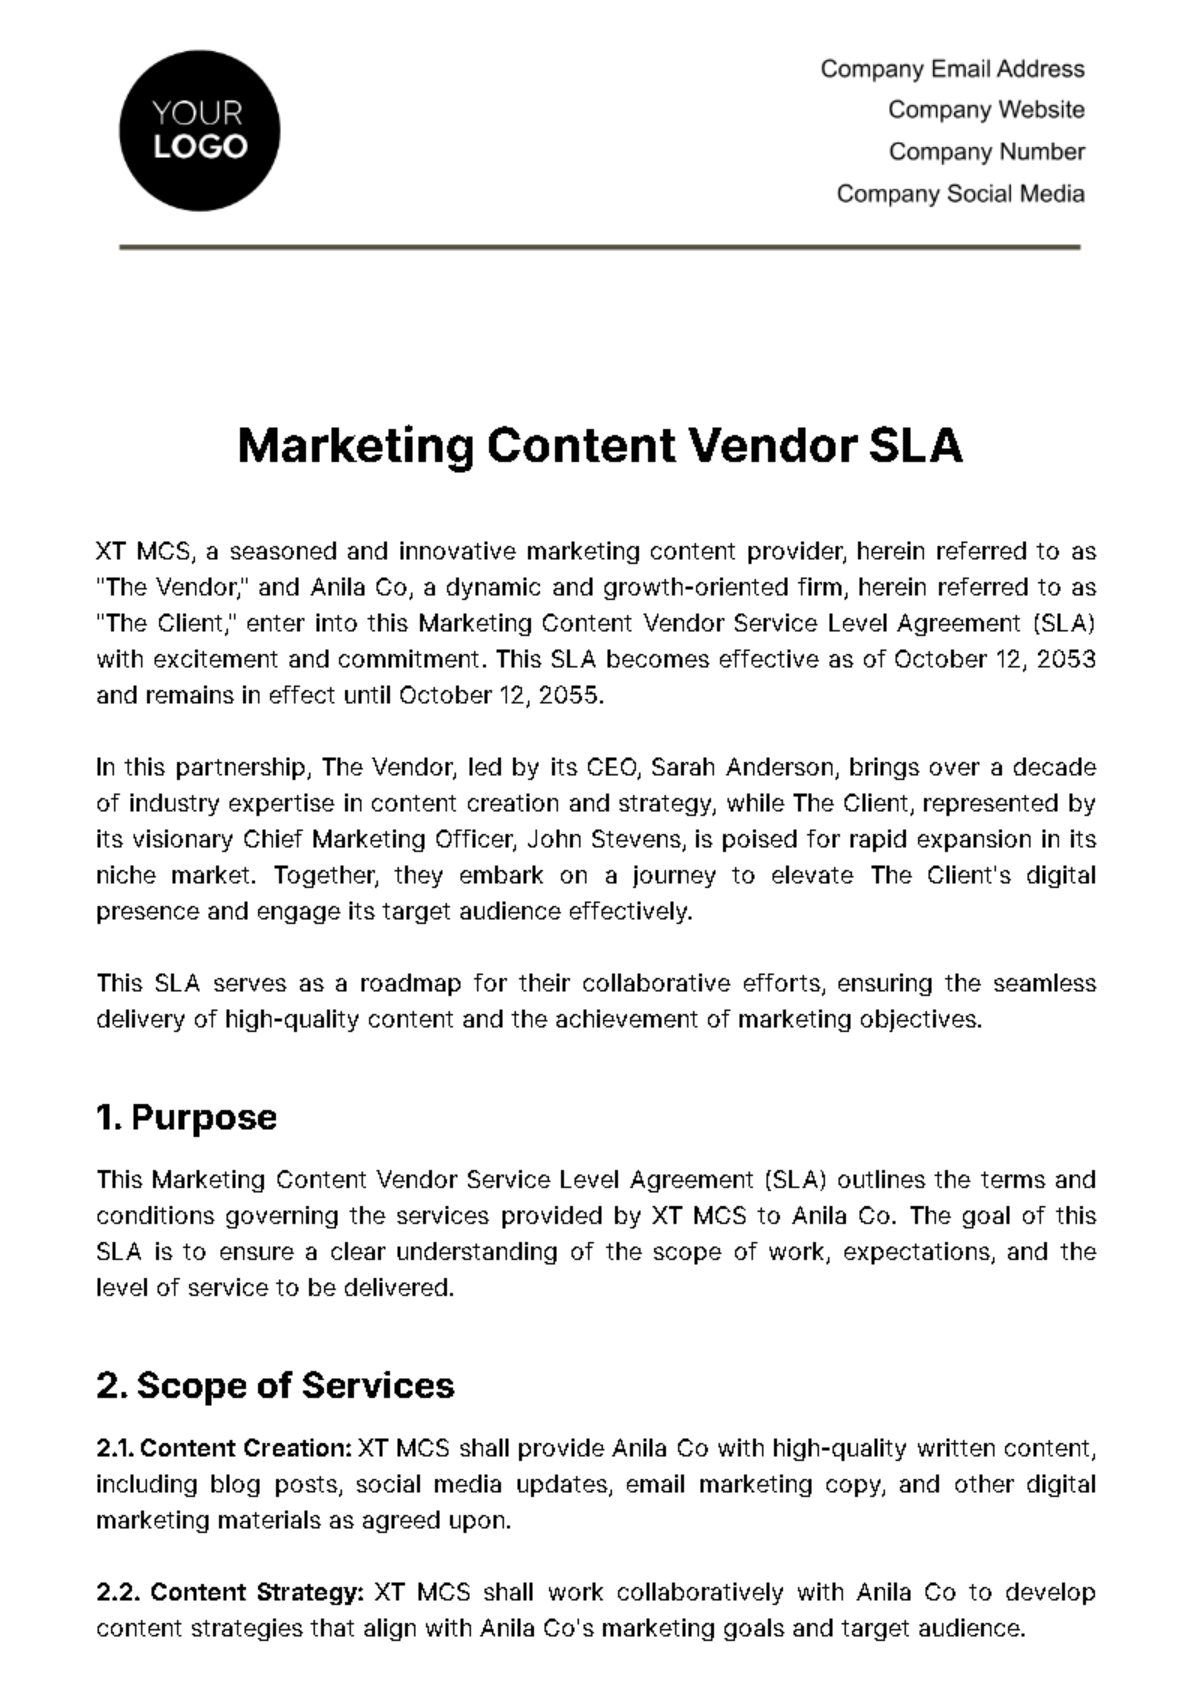 Marketing Content Vendor SLA Template